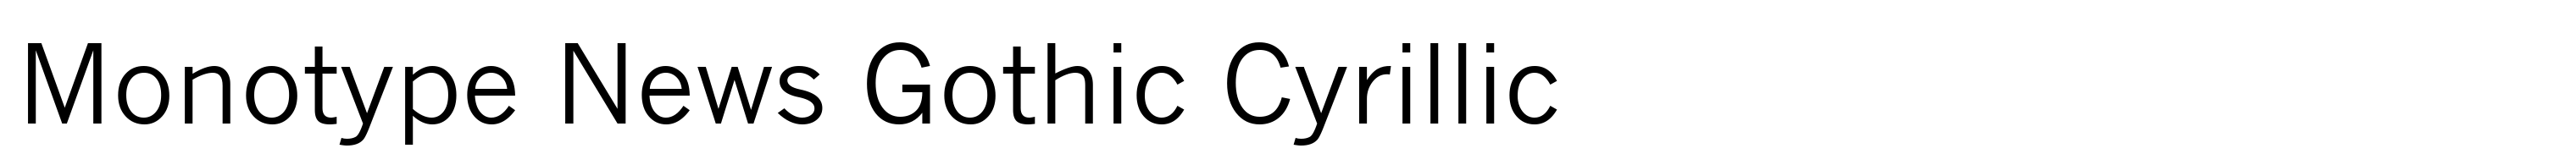 Monotype News Gothic Cyrillic